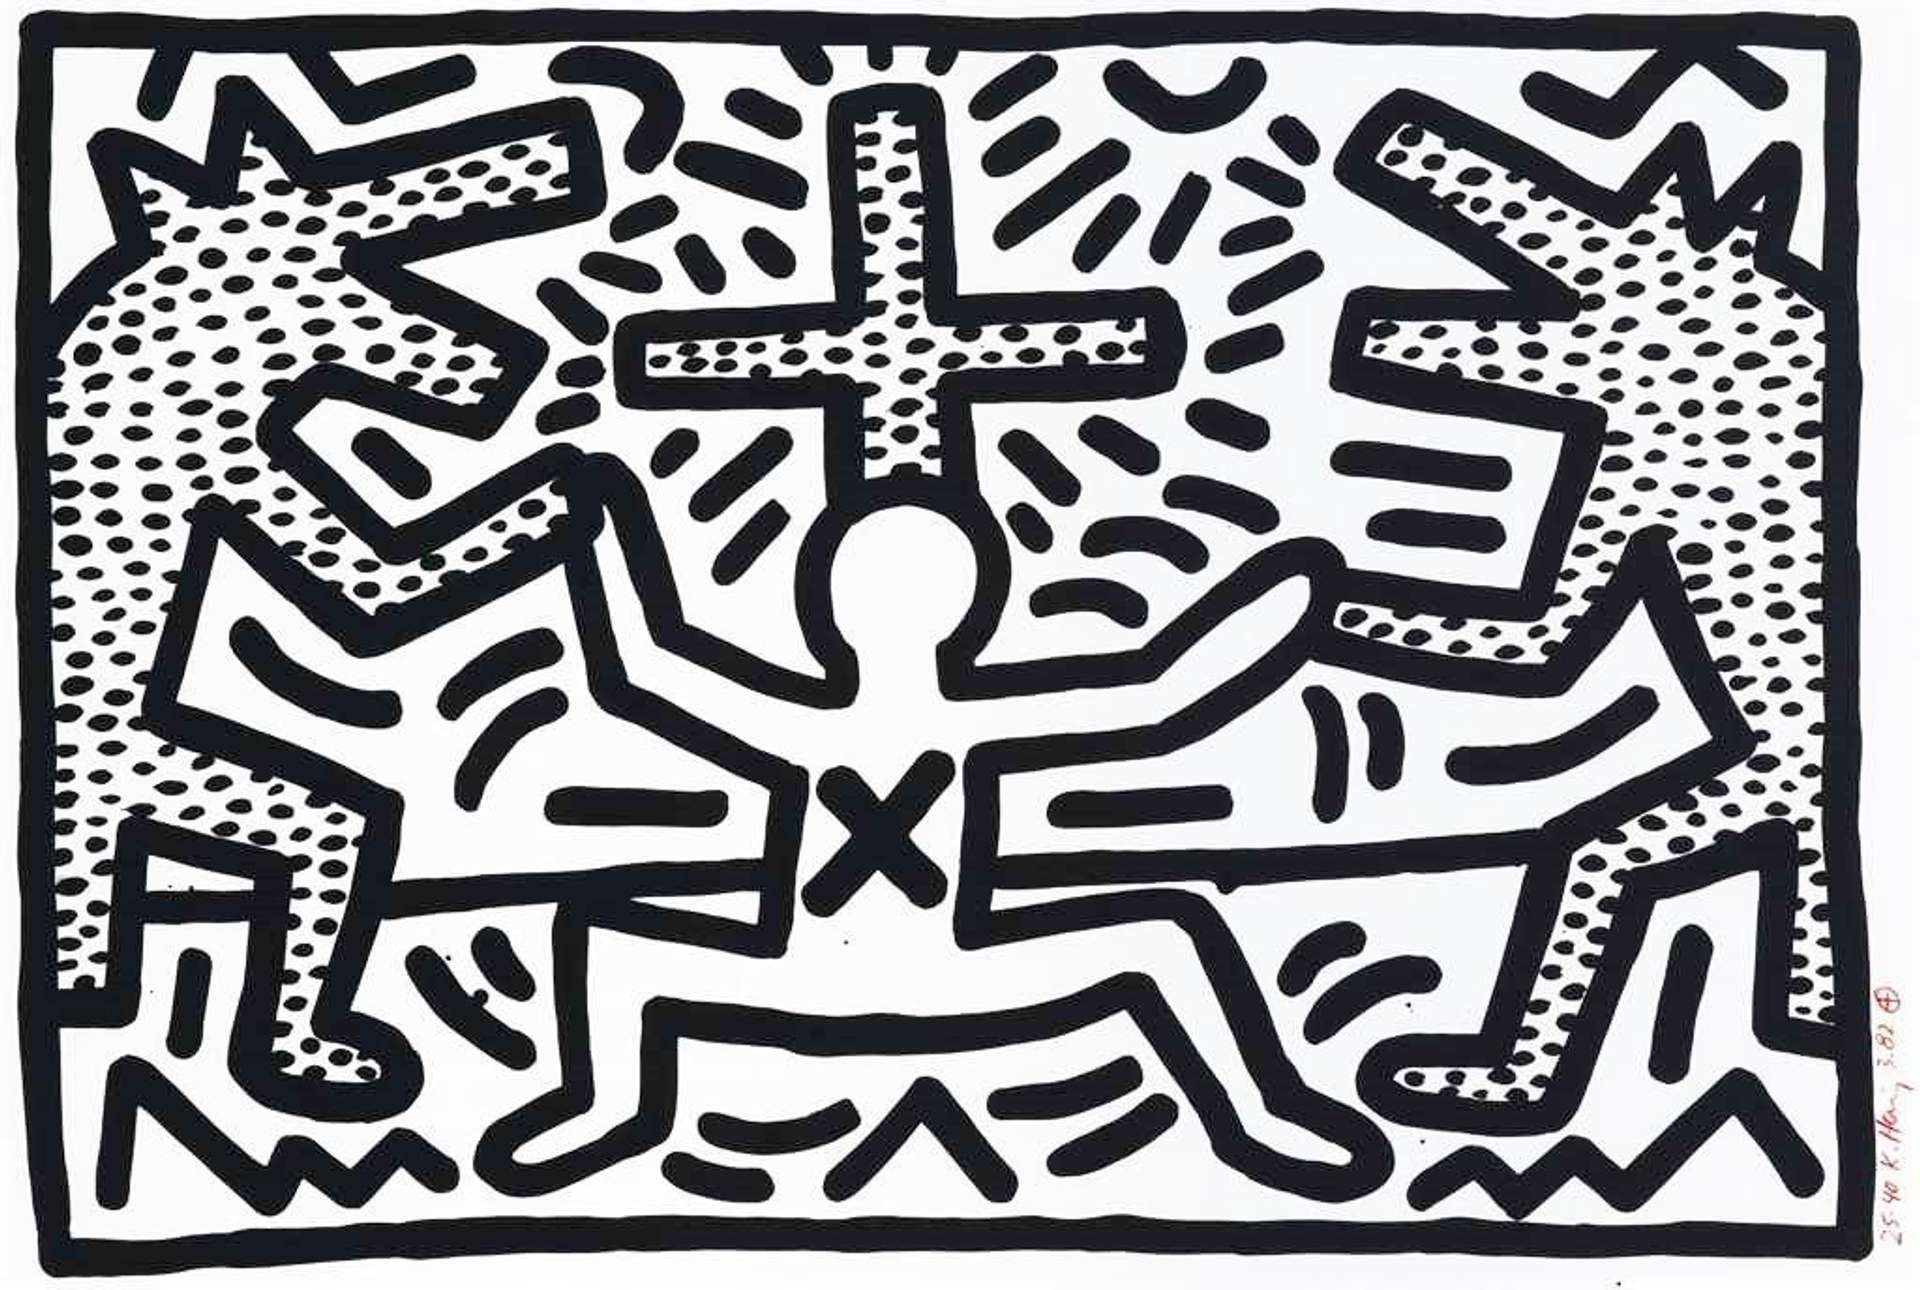 Untitled 1982 by Keith Haring - MyArtBroker